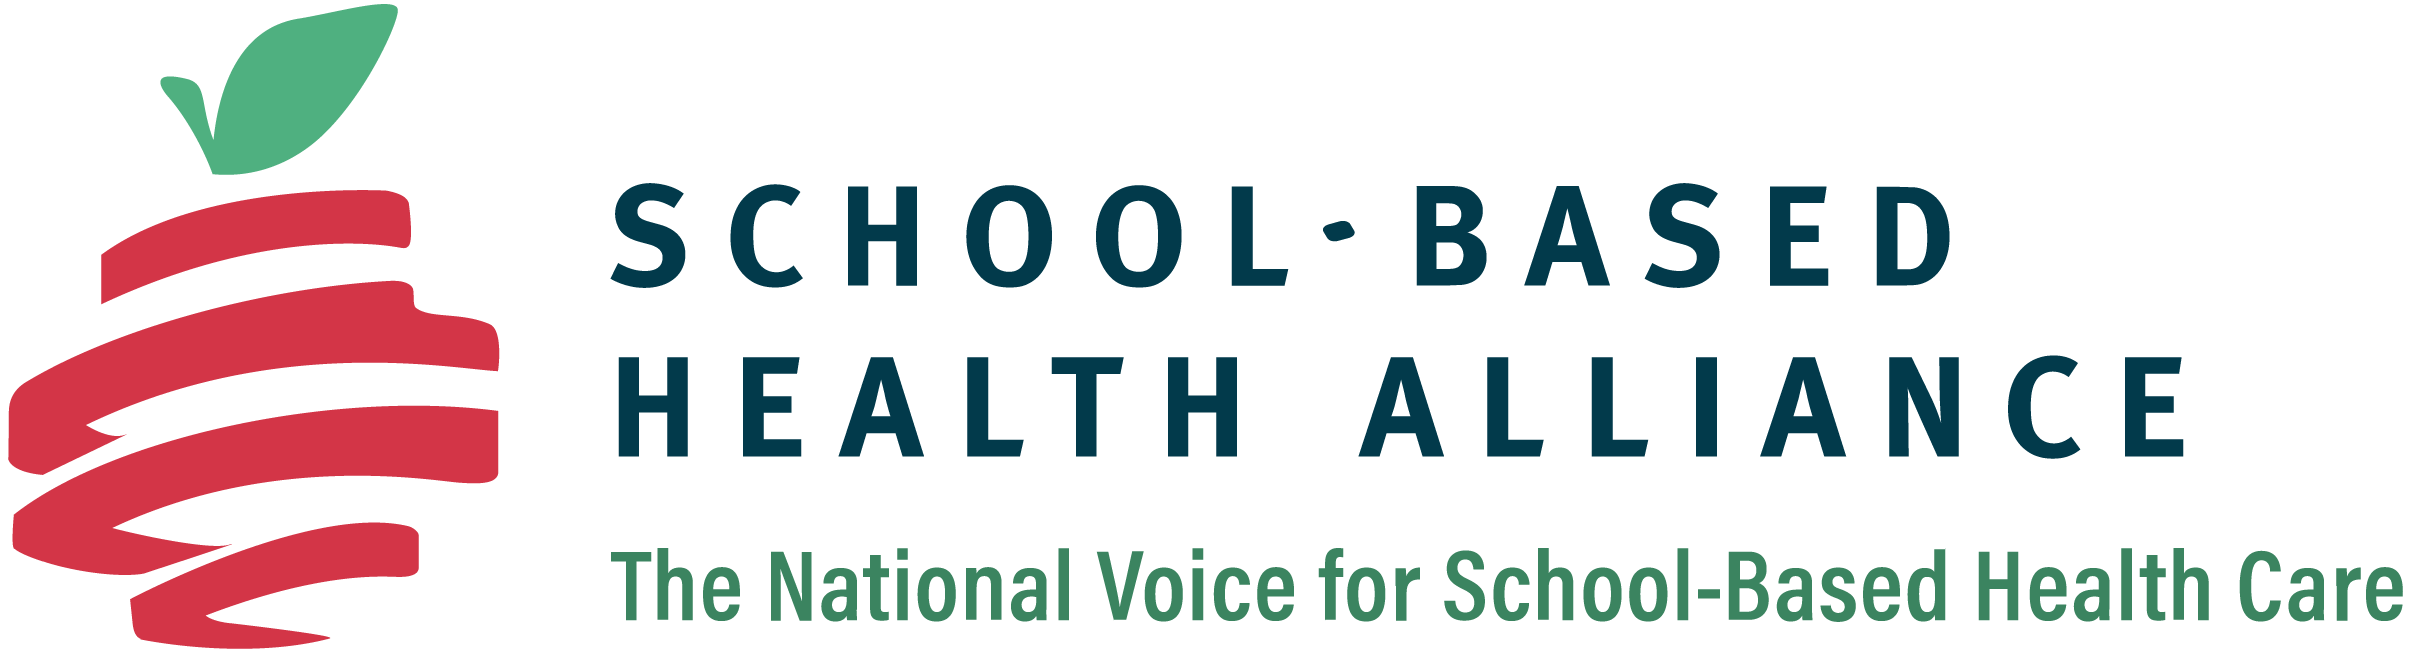 School-based Health Alliance (Copy)